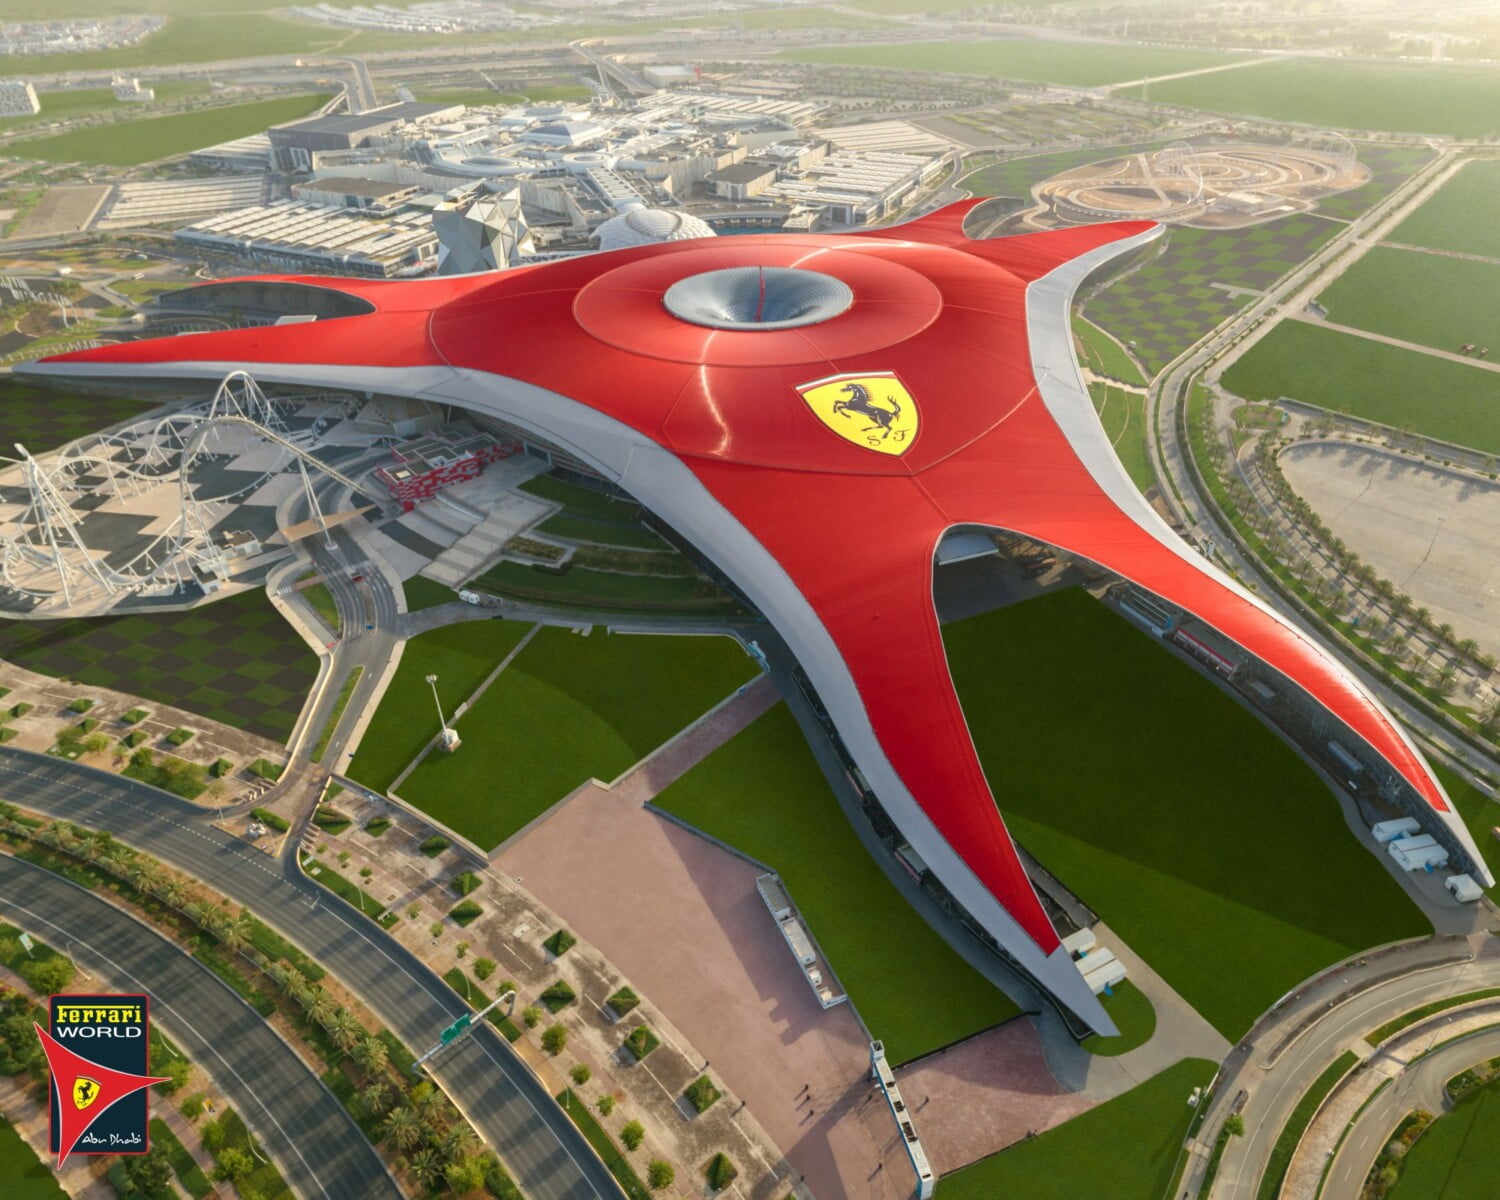 Best Abu Dhabi 1 Day Tour with Ferrari World Tickets